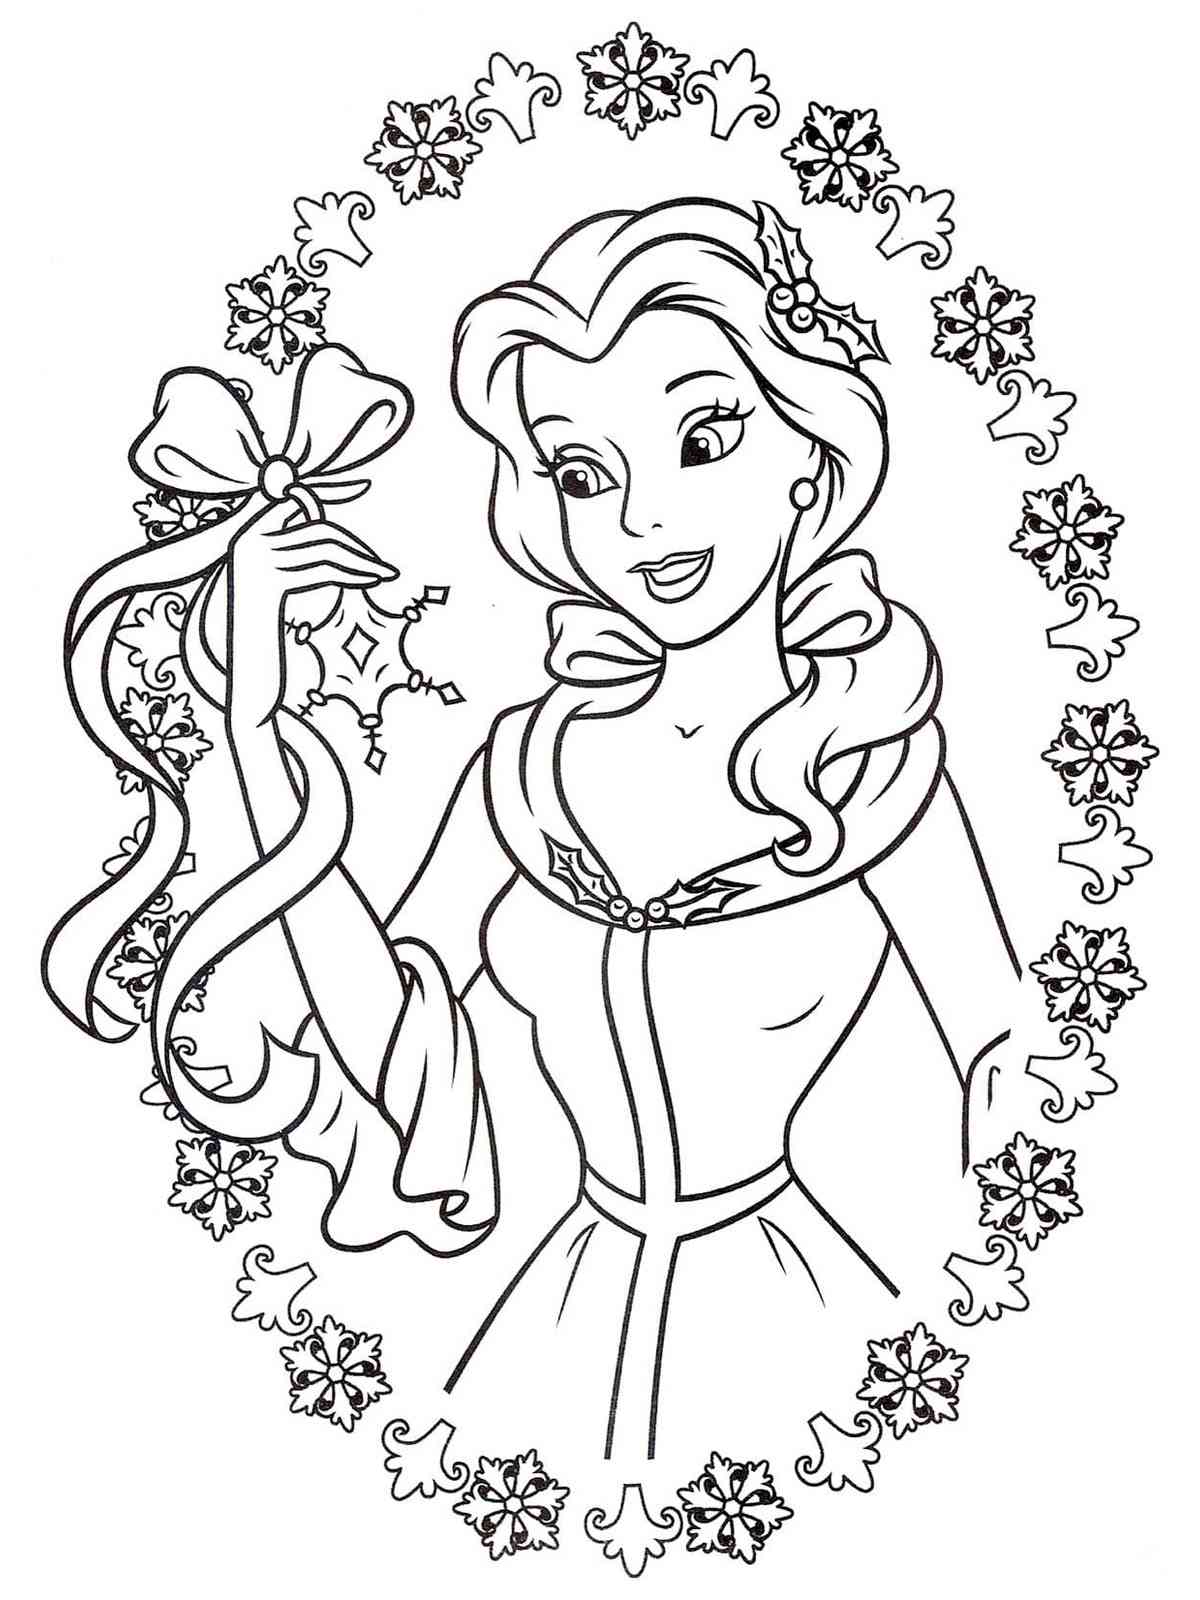 Princess Belle coloring pages. Free Printable Princess Belle ...